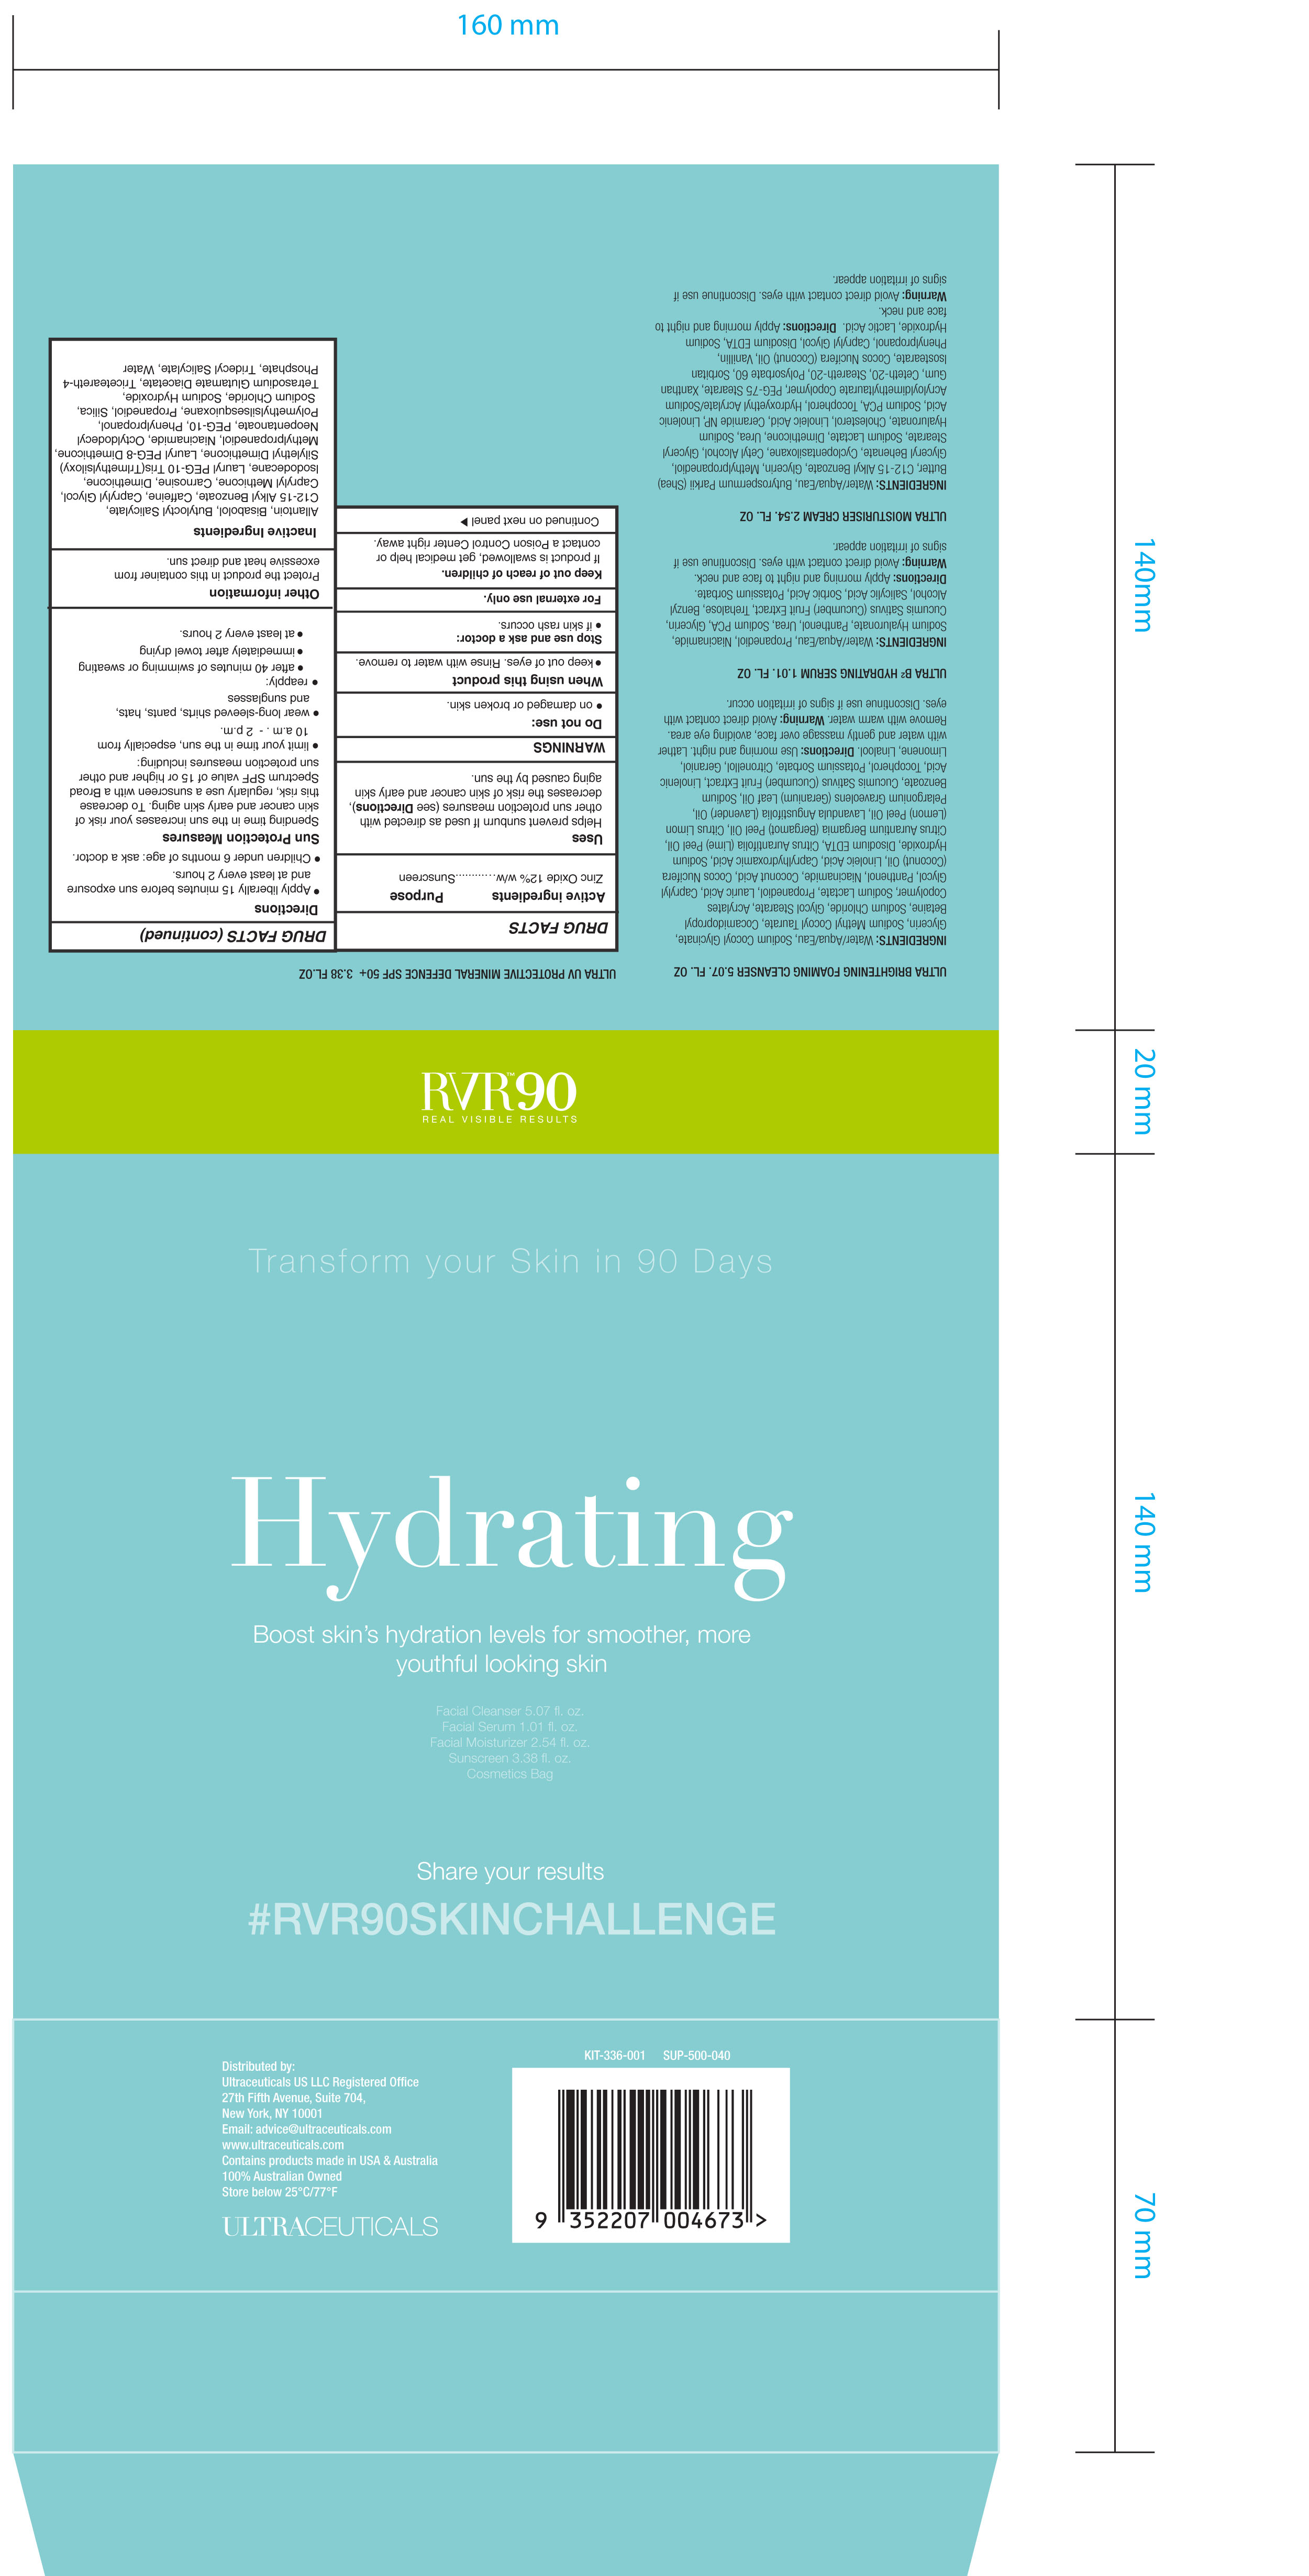 Hydrating RVR Kit